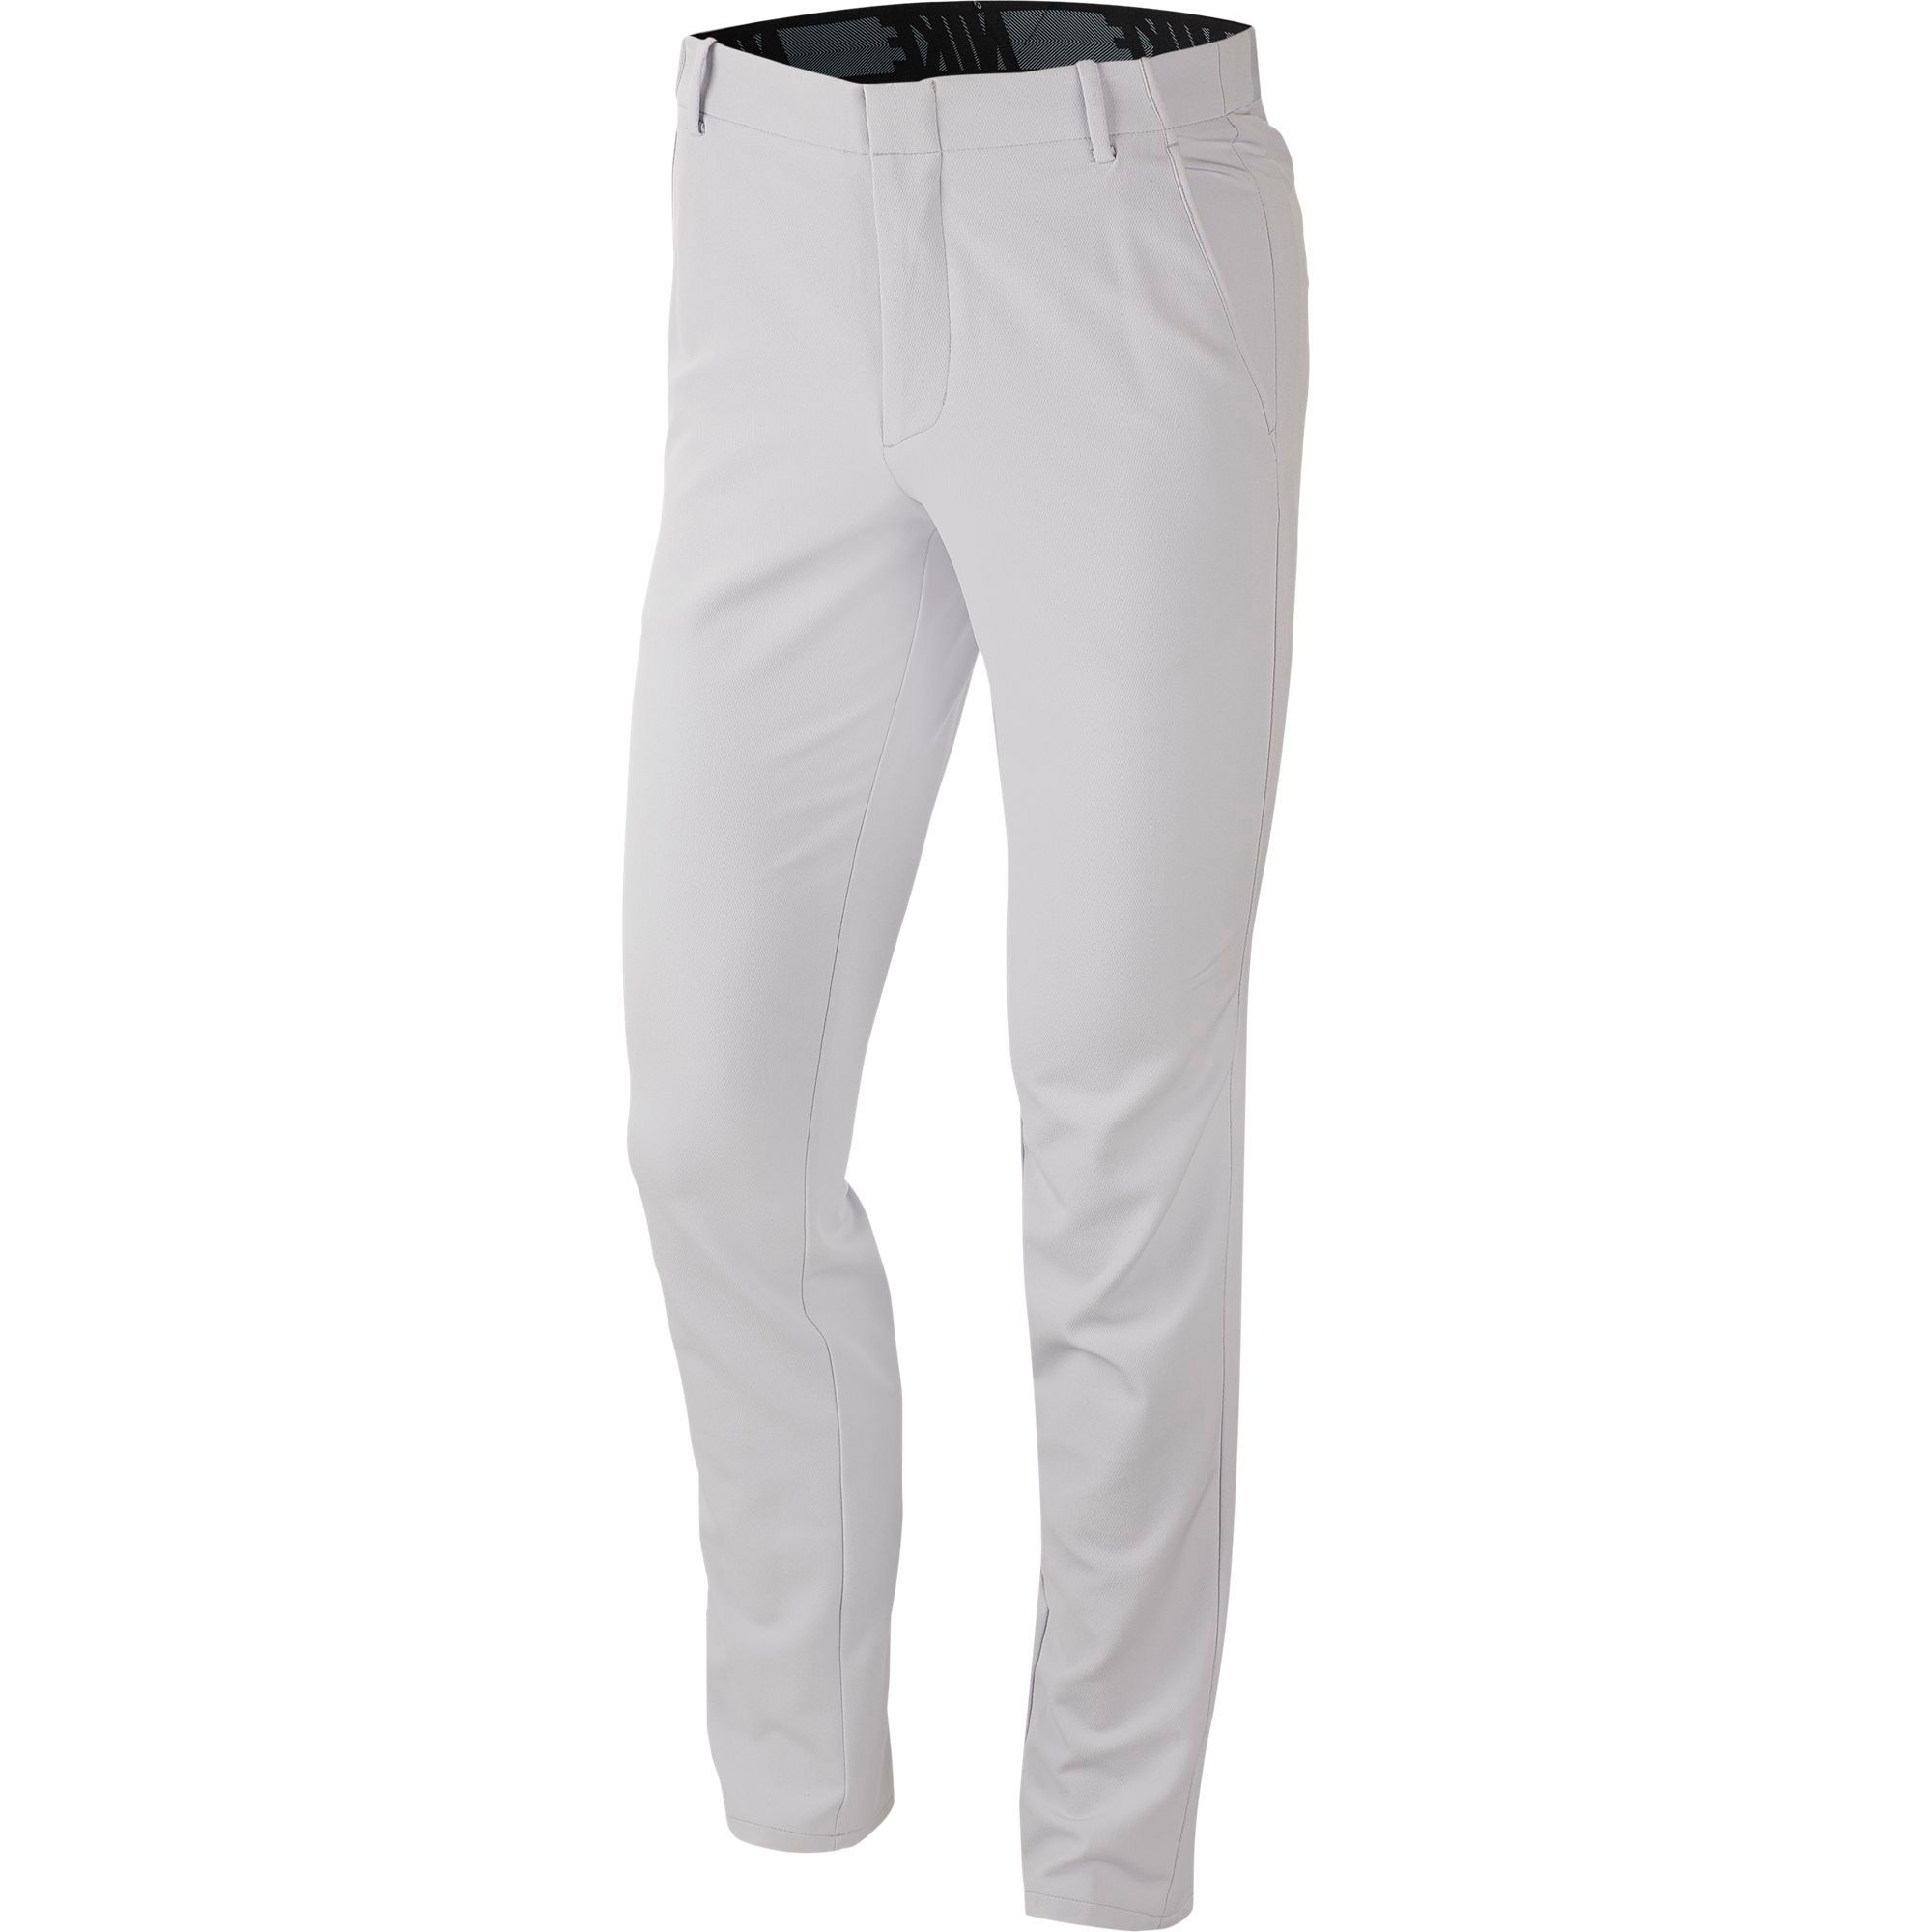 Nike Men's Slim Fit Flex Vapor Golf Pants - .97 - .97